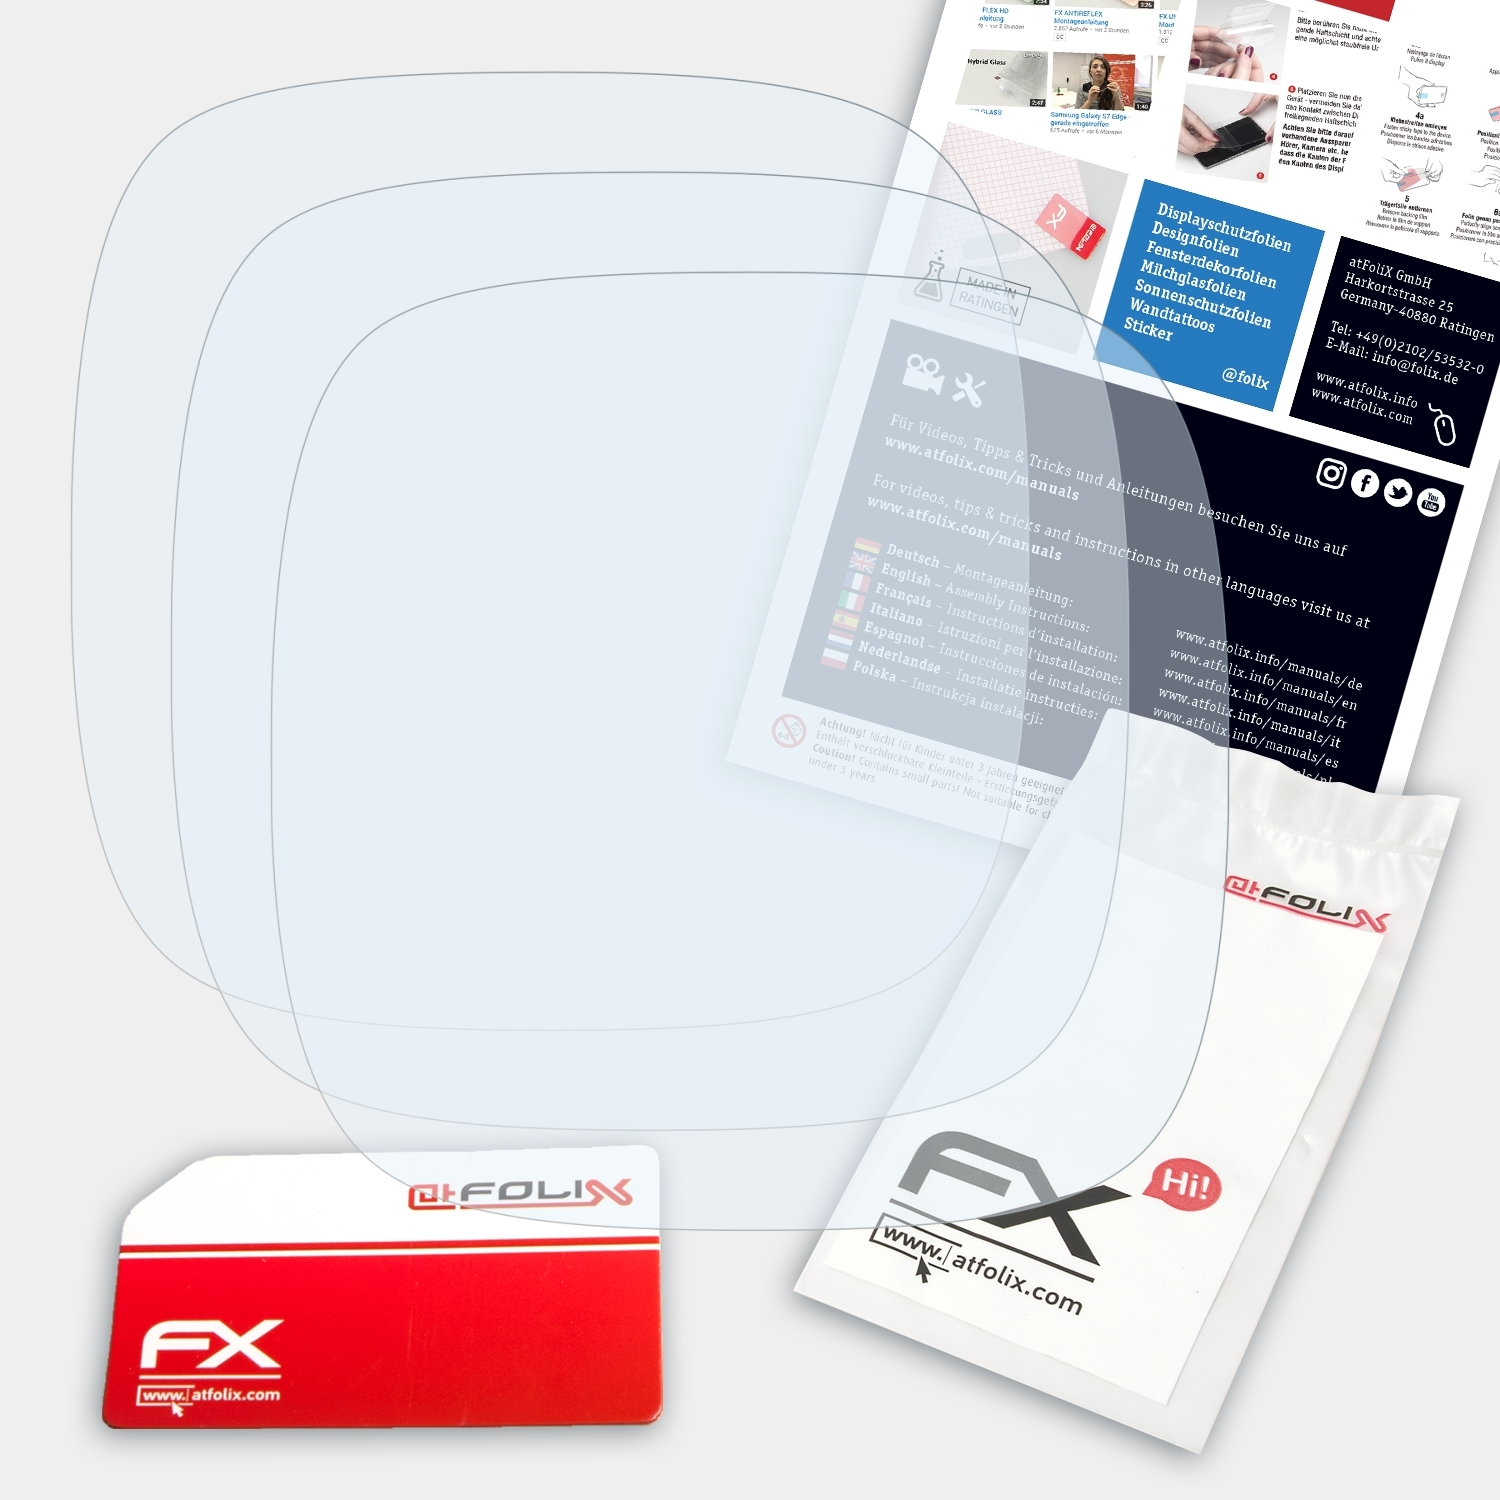 ATFOLIX 3x FX-Clear Displayschutz(für Kids) XPlora